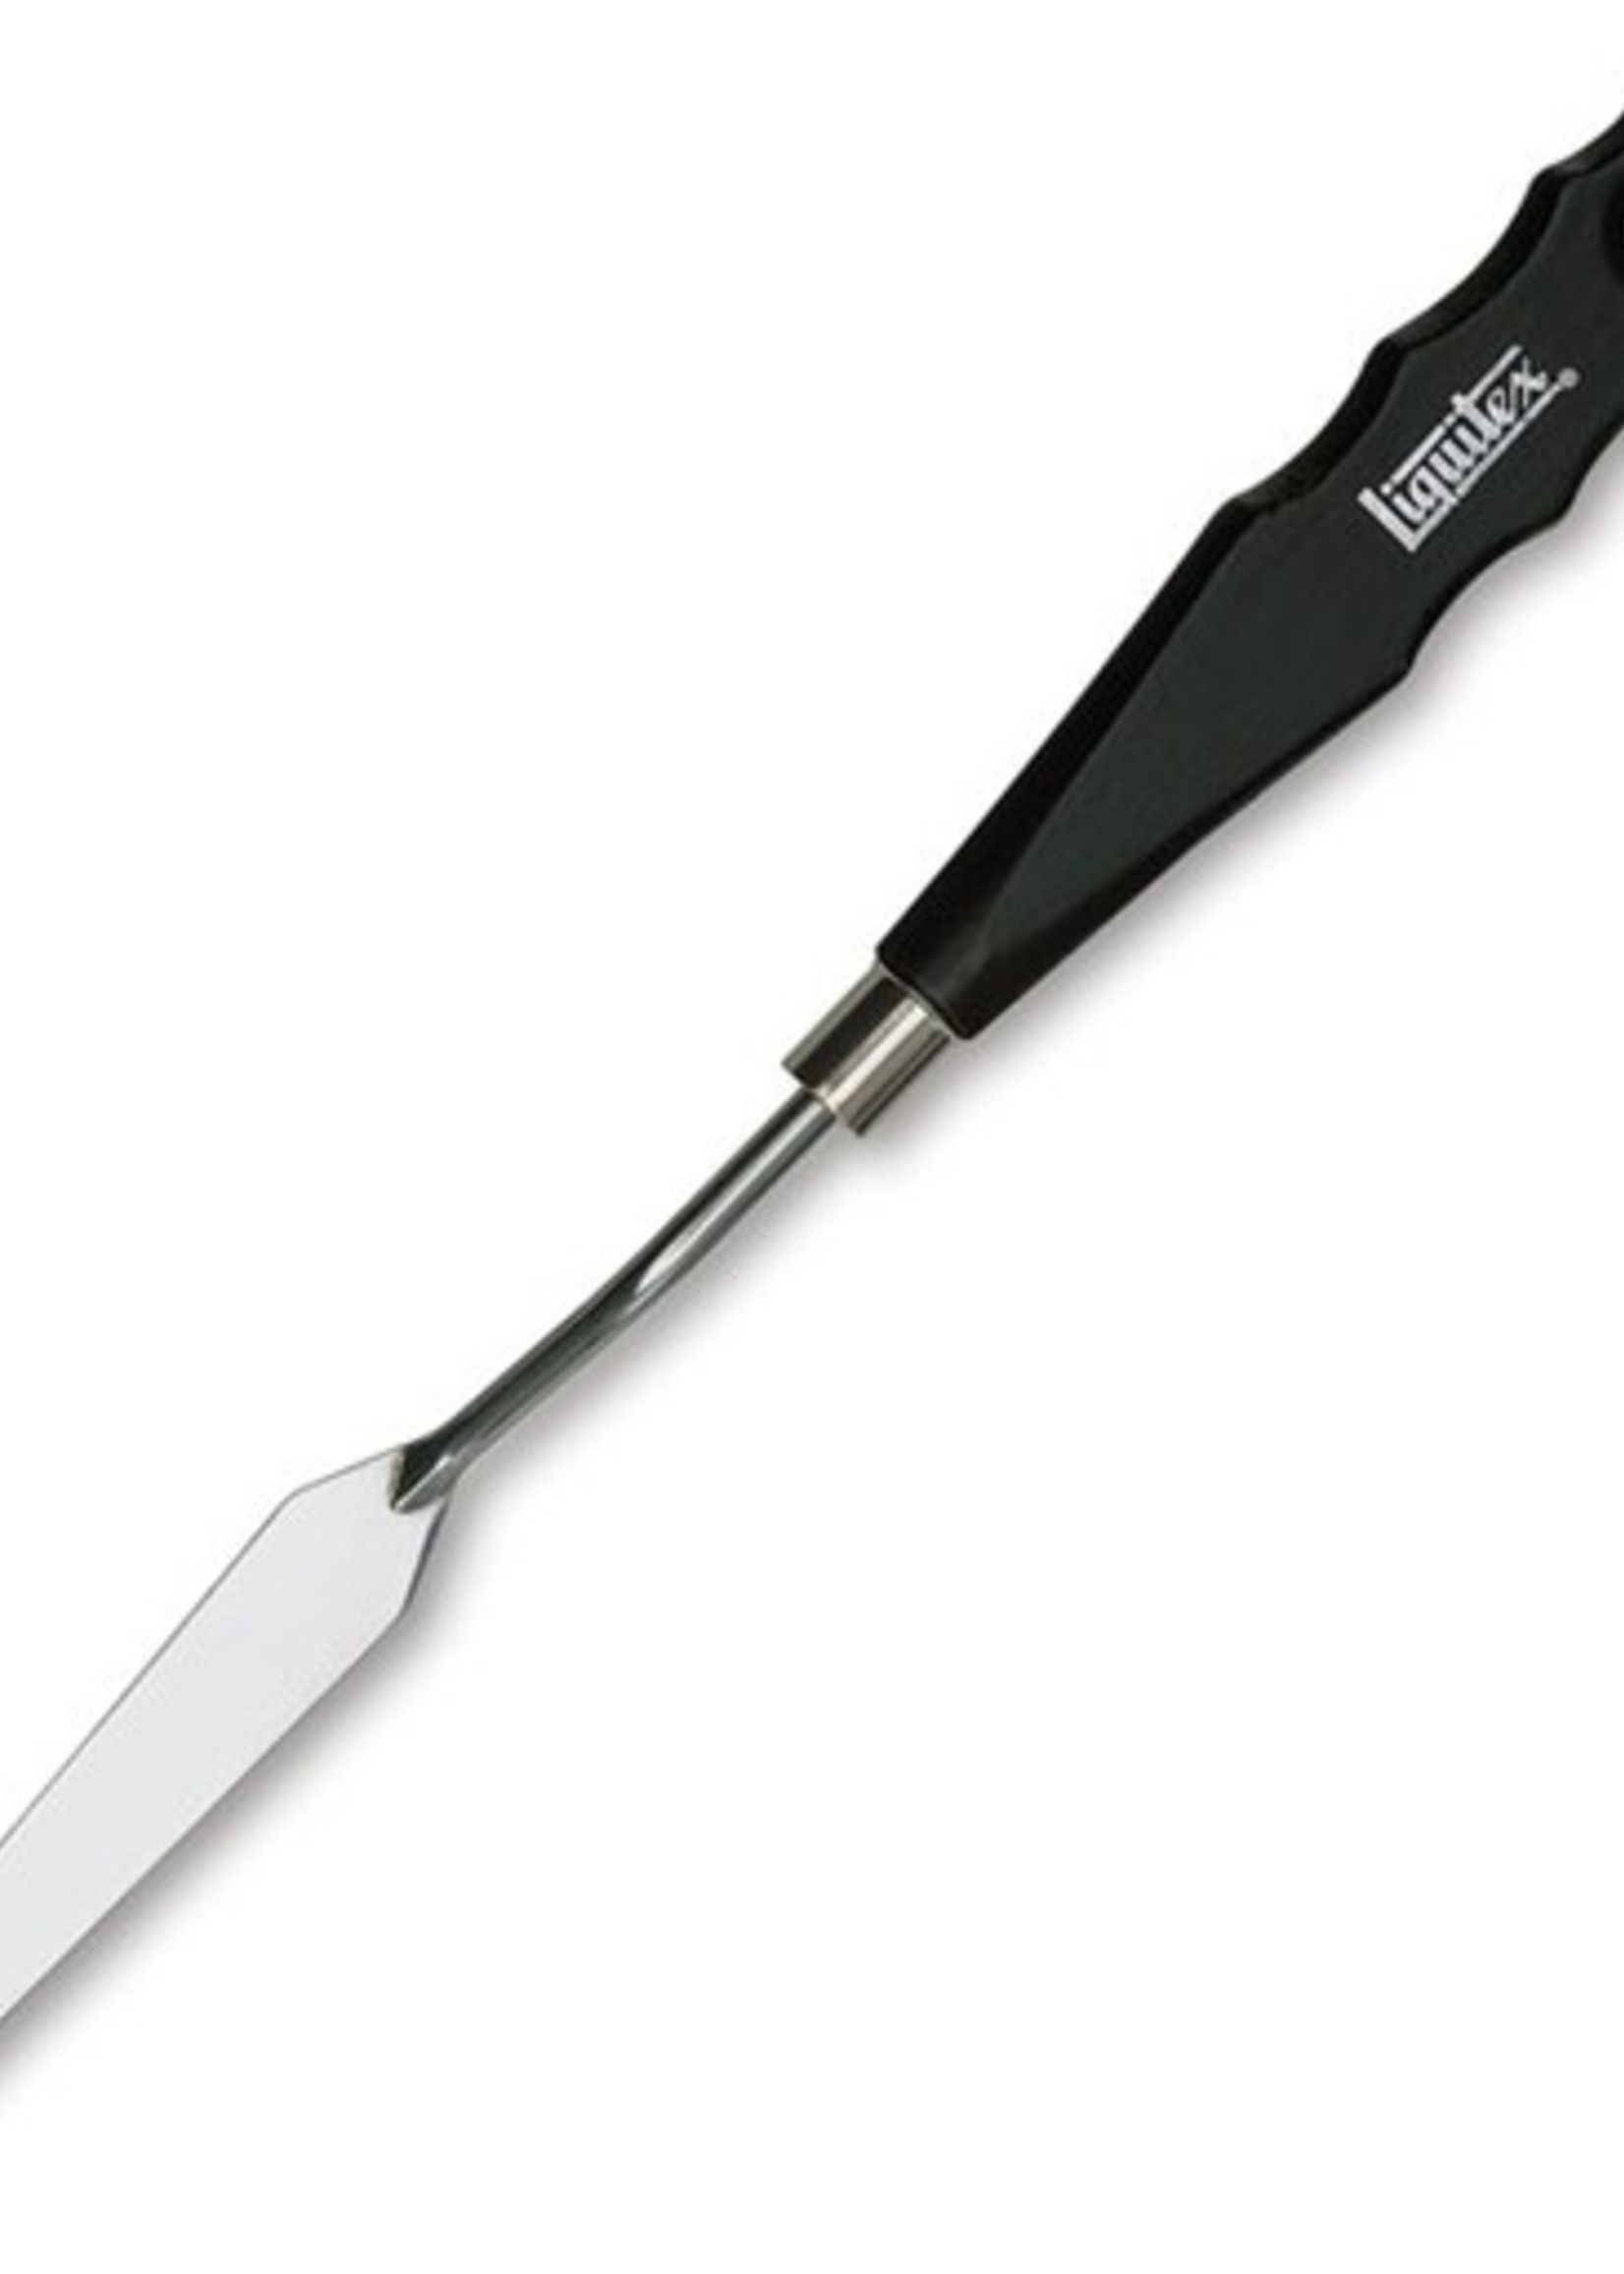 LIQUITEX LIQUITEX PALETTE KNIFE SMALL 11